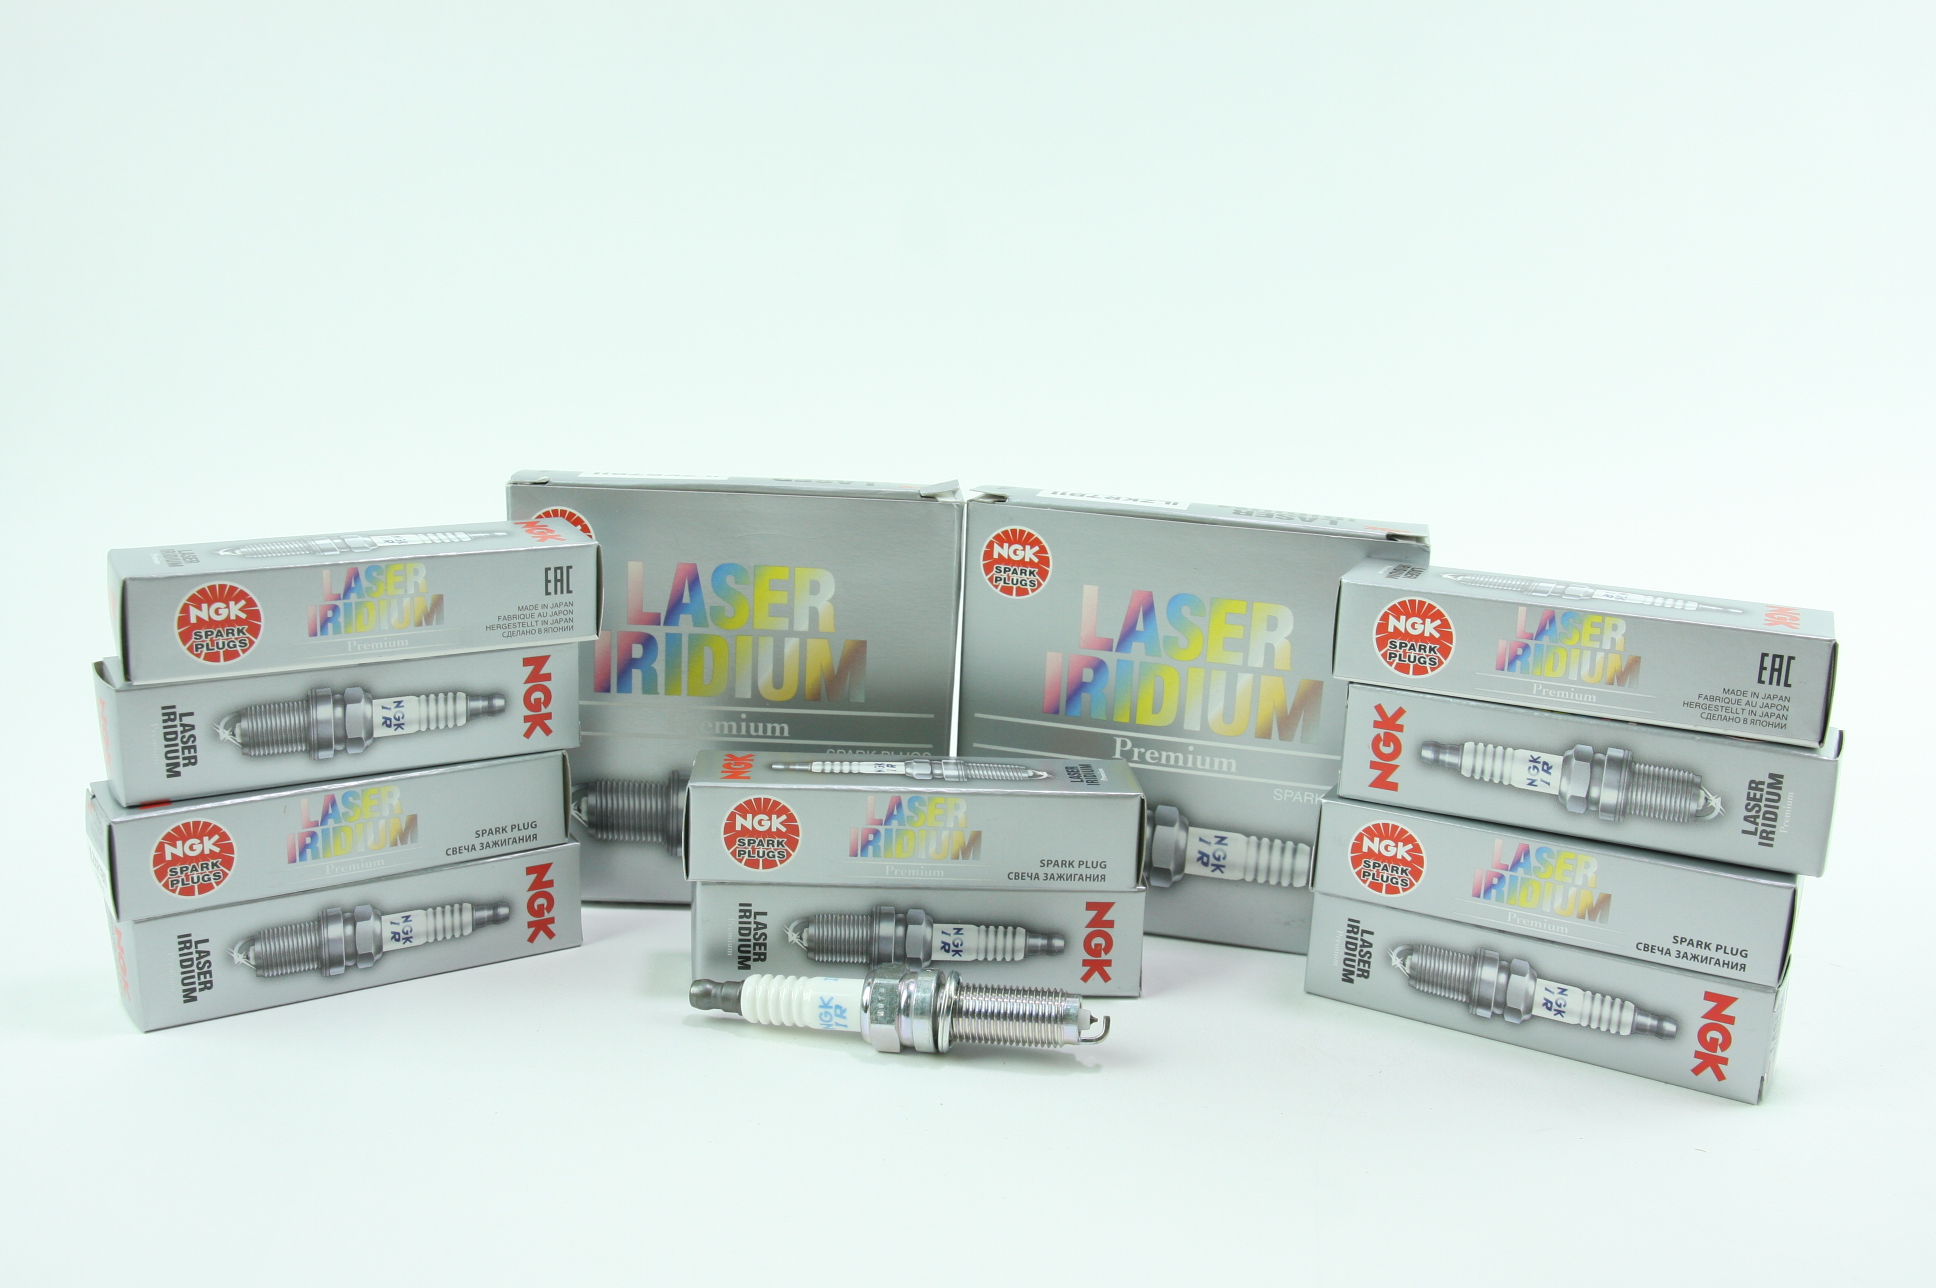 New Set of 8 NGK 7751 ILZKR7B11 Laser Iridium and Platinum Spark Plugs - image 1